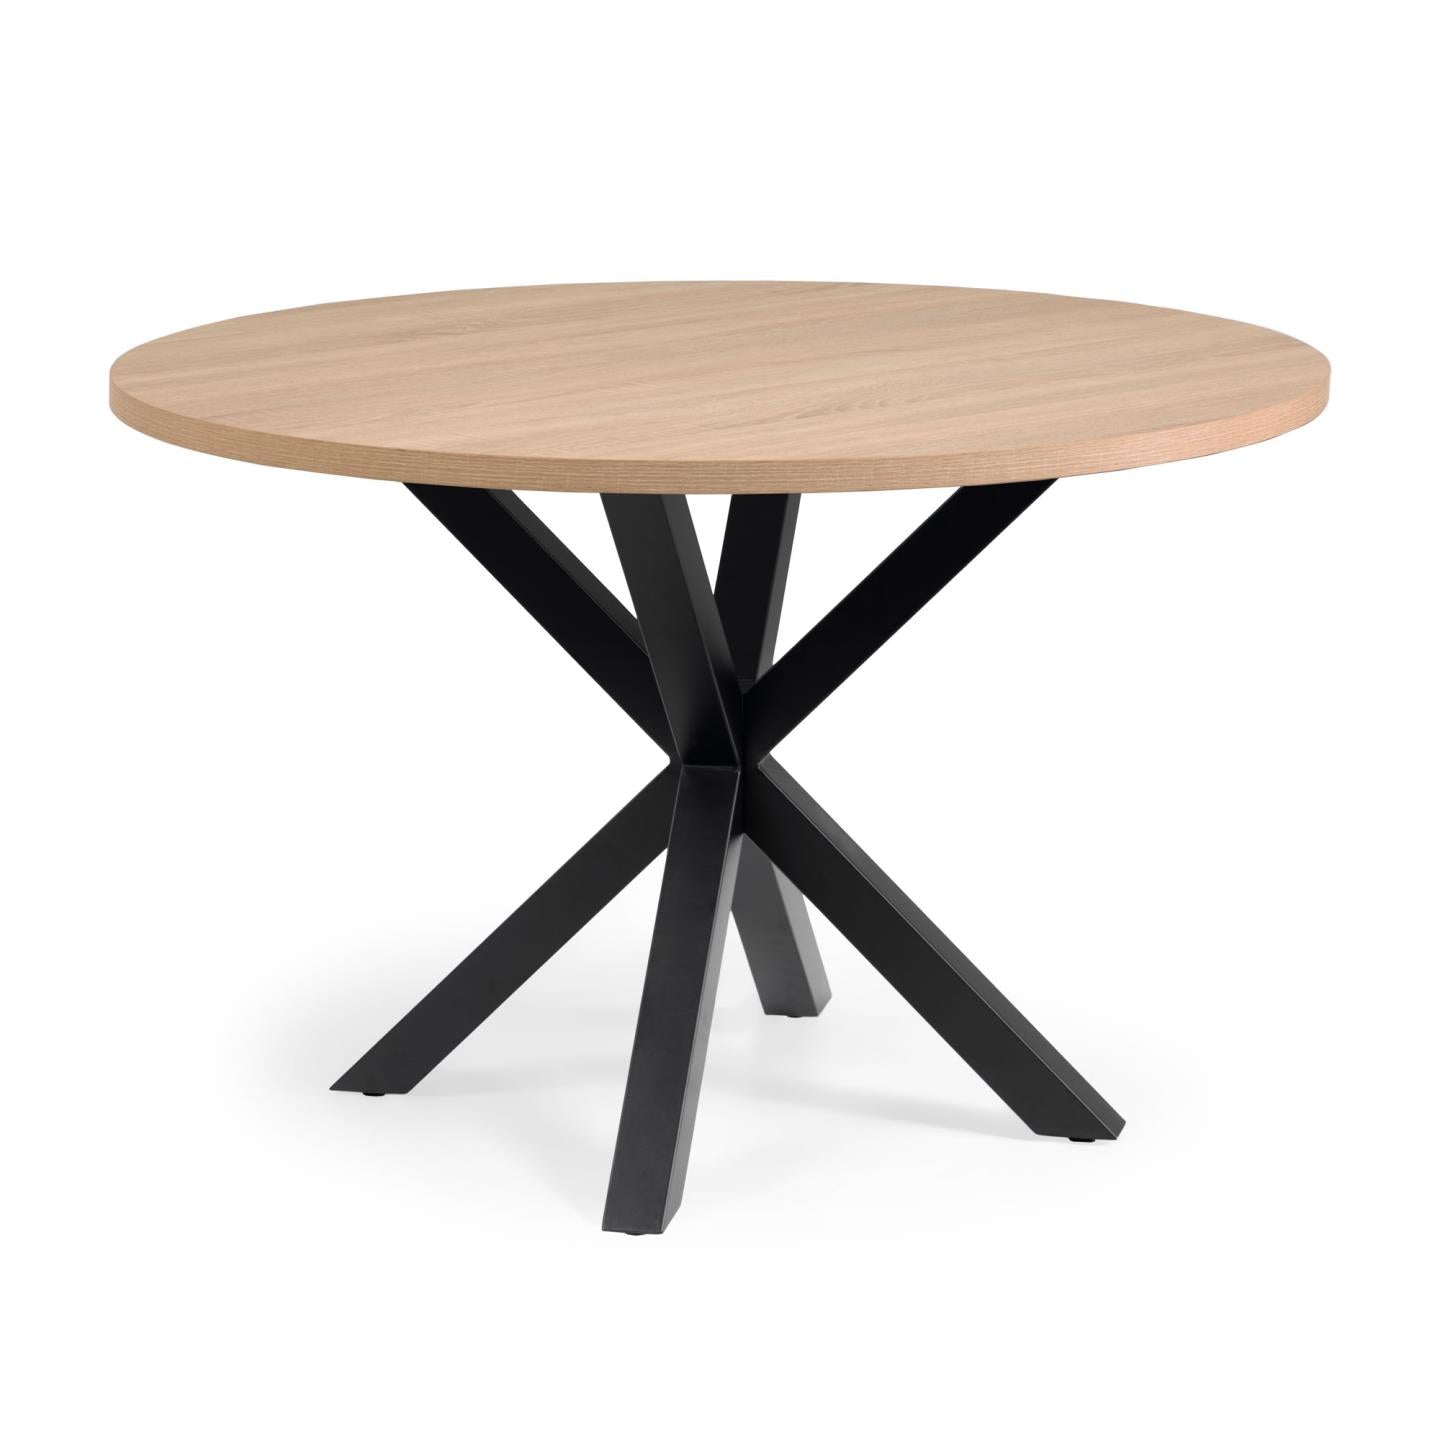 Full Argo round Ø 119 cm melamine table with steel legs with black finish